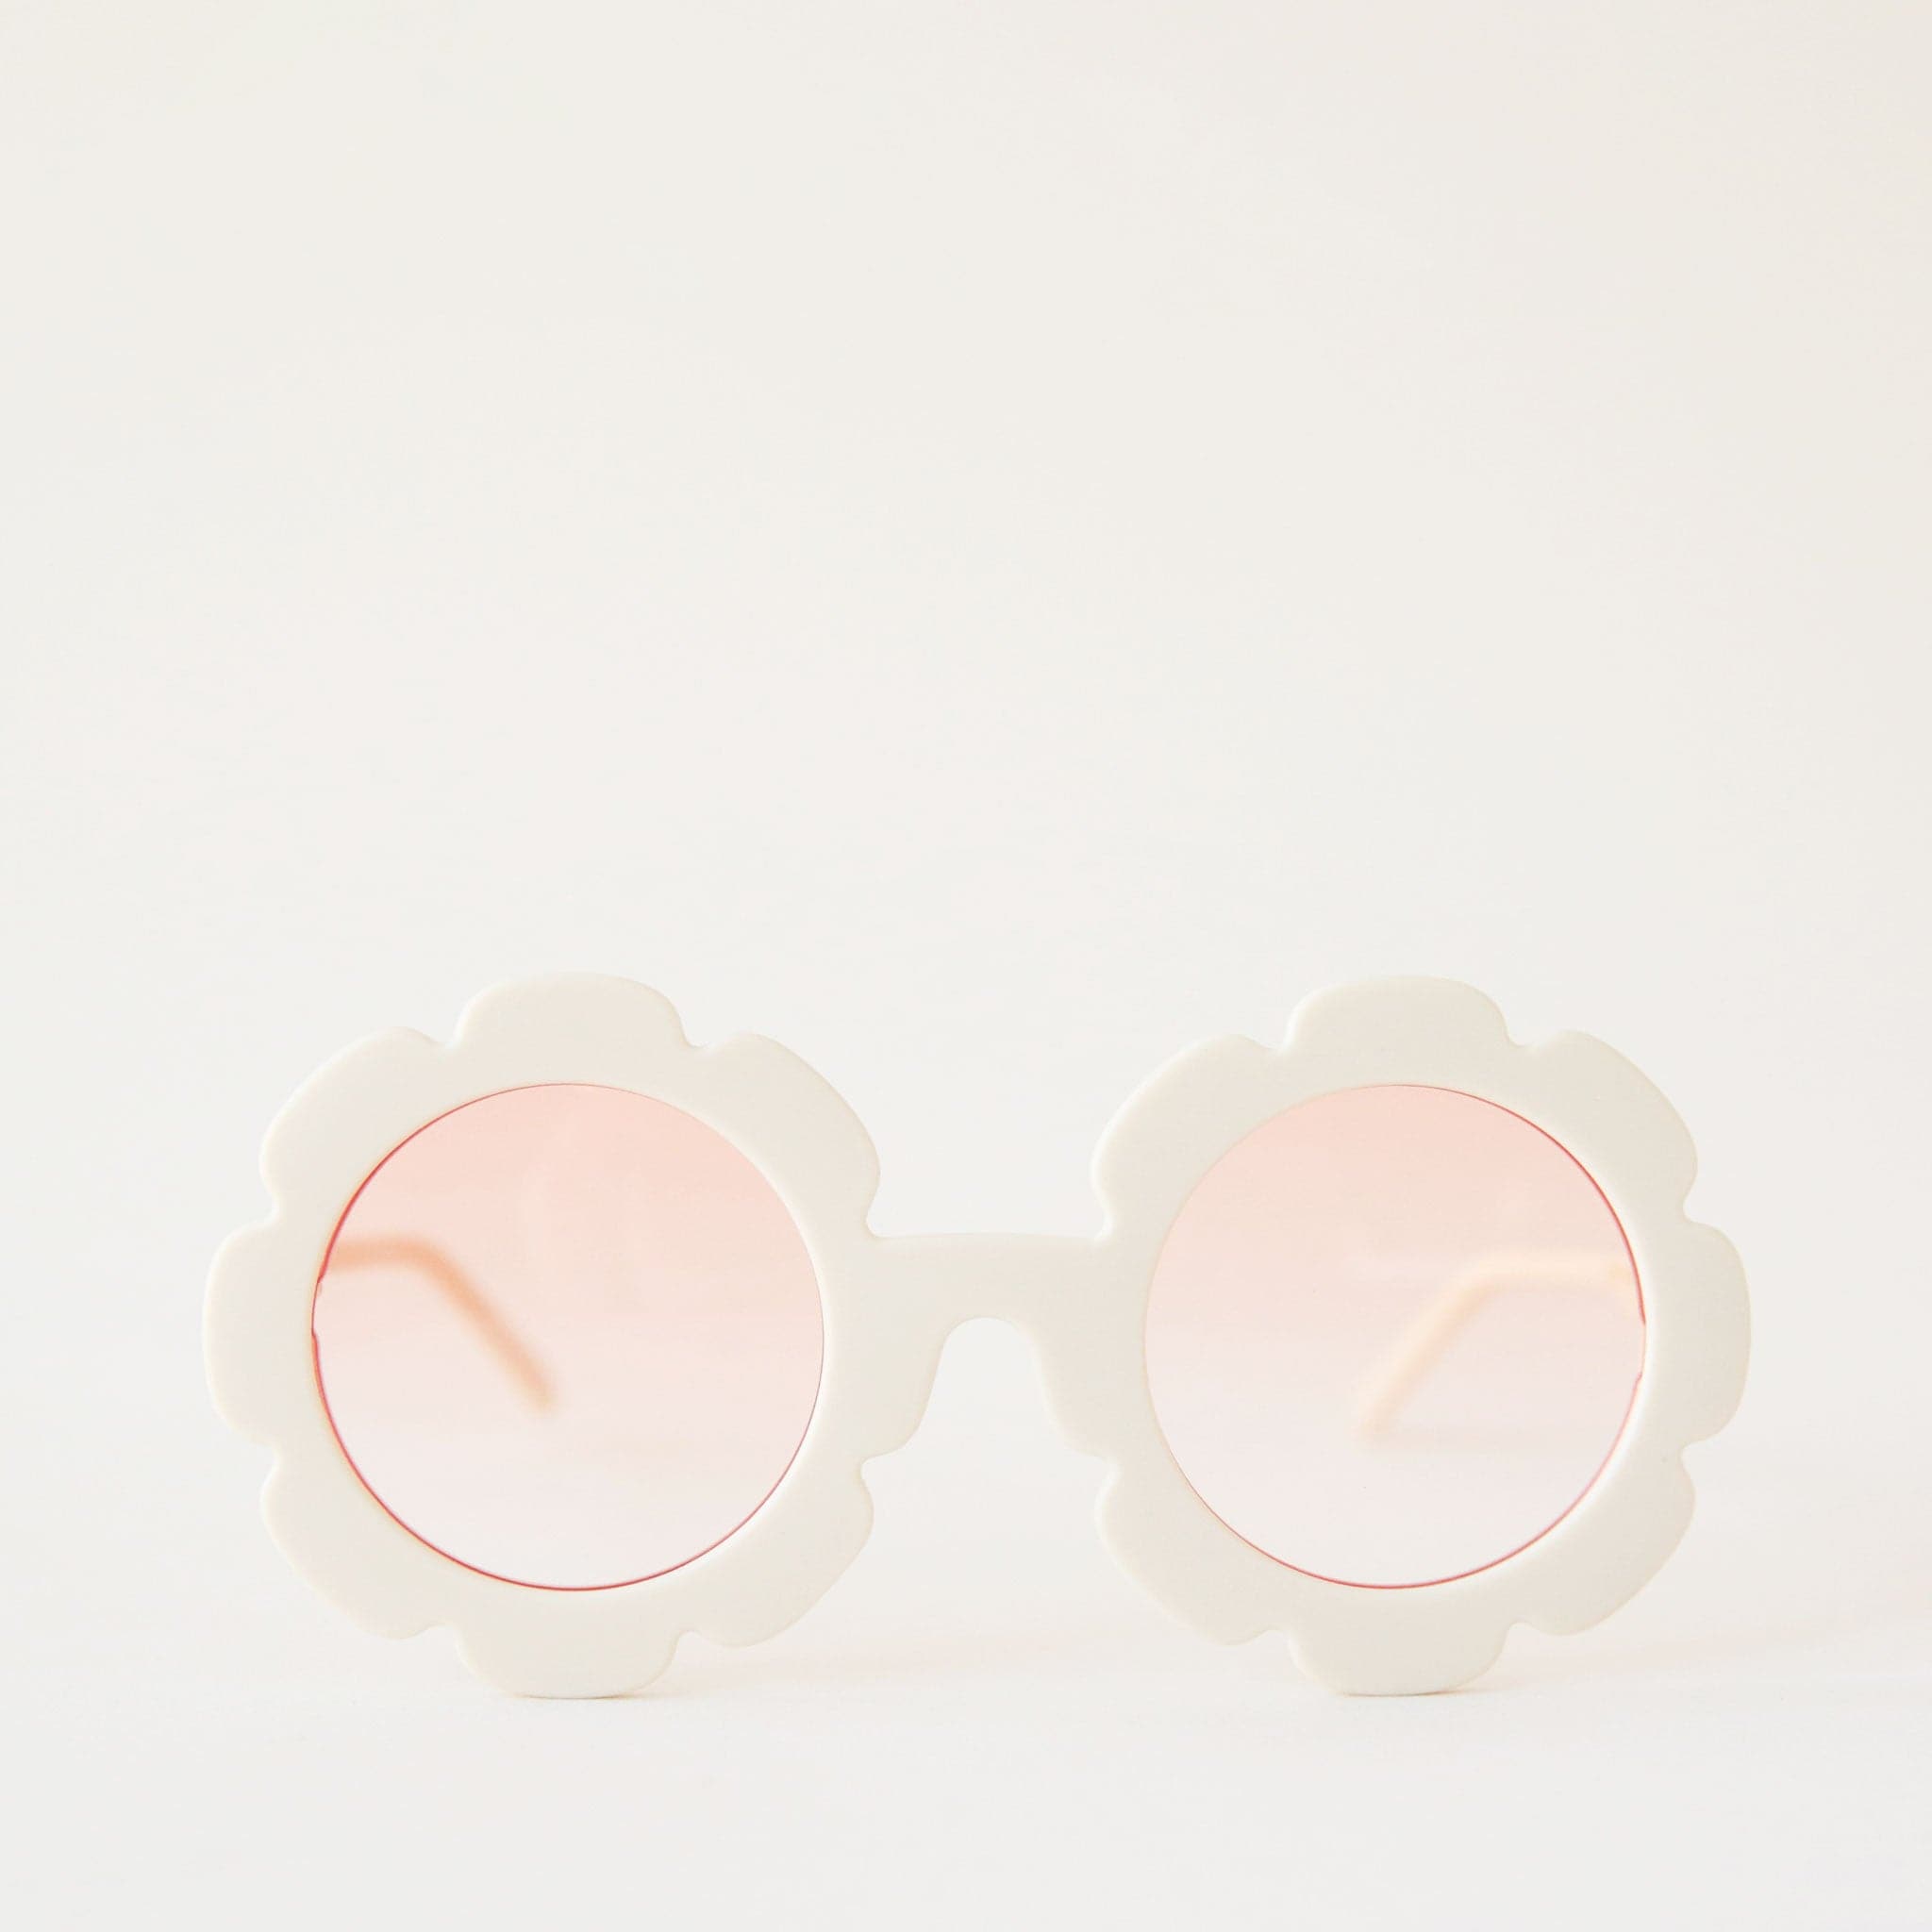 White flower shaped sunglasses with light pink lenses.